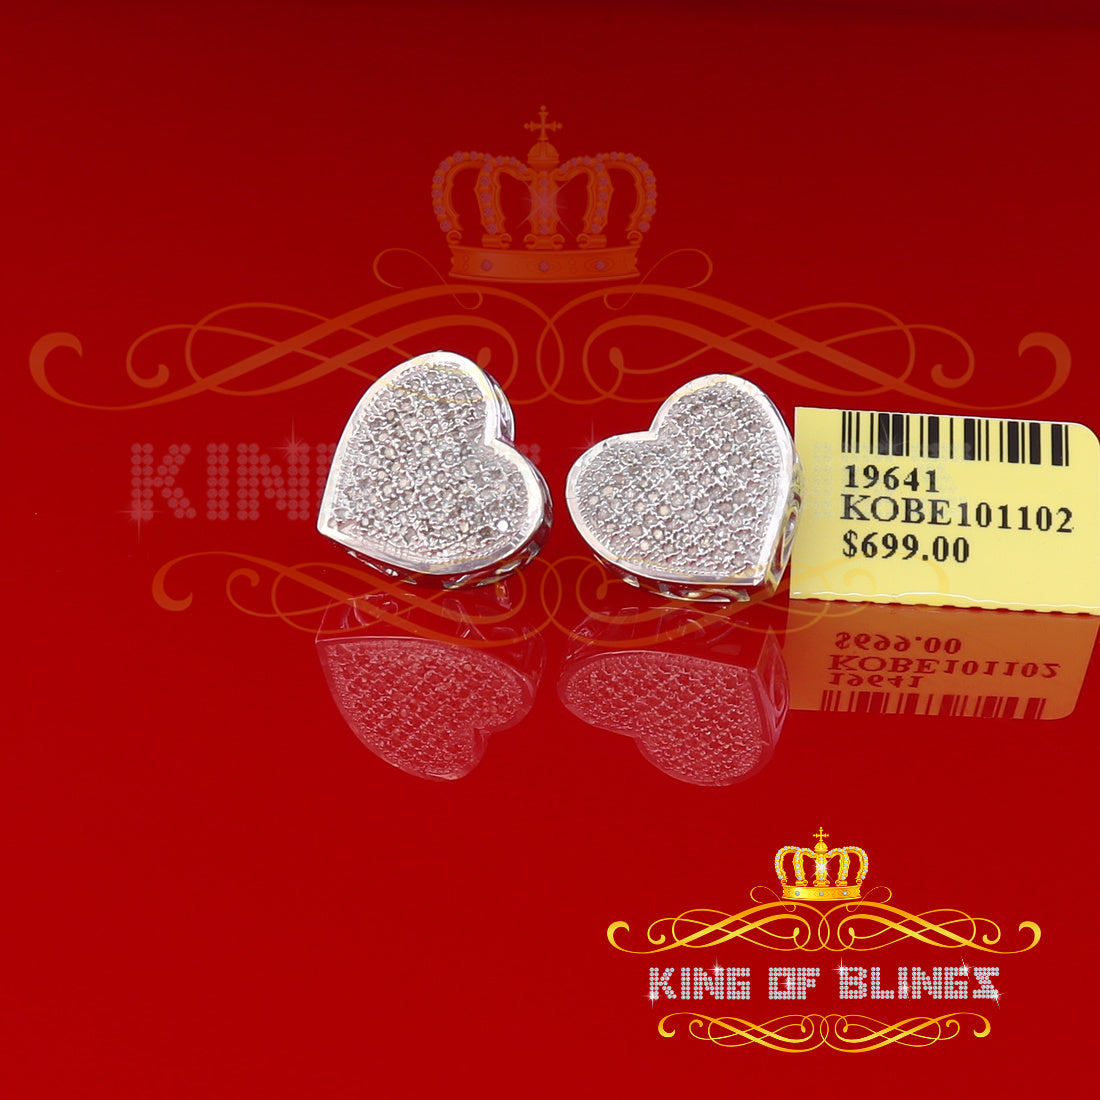 King Of Bling's Micro Pave 0.33ct Real Diamonds 925 White Silver Women's & Men's Heart Earrings KING OF BLINGS